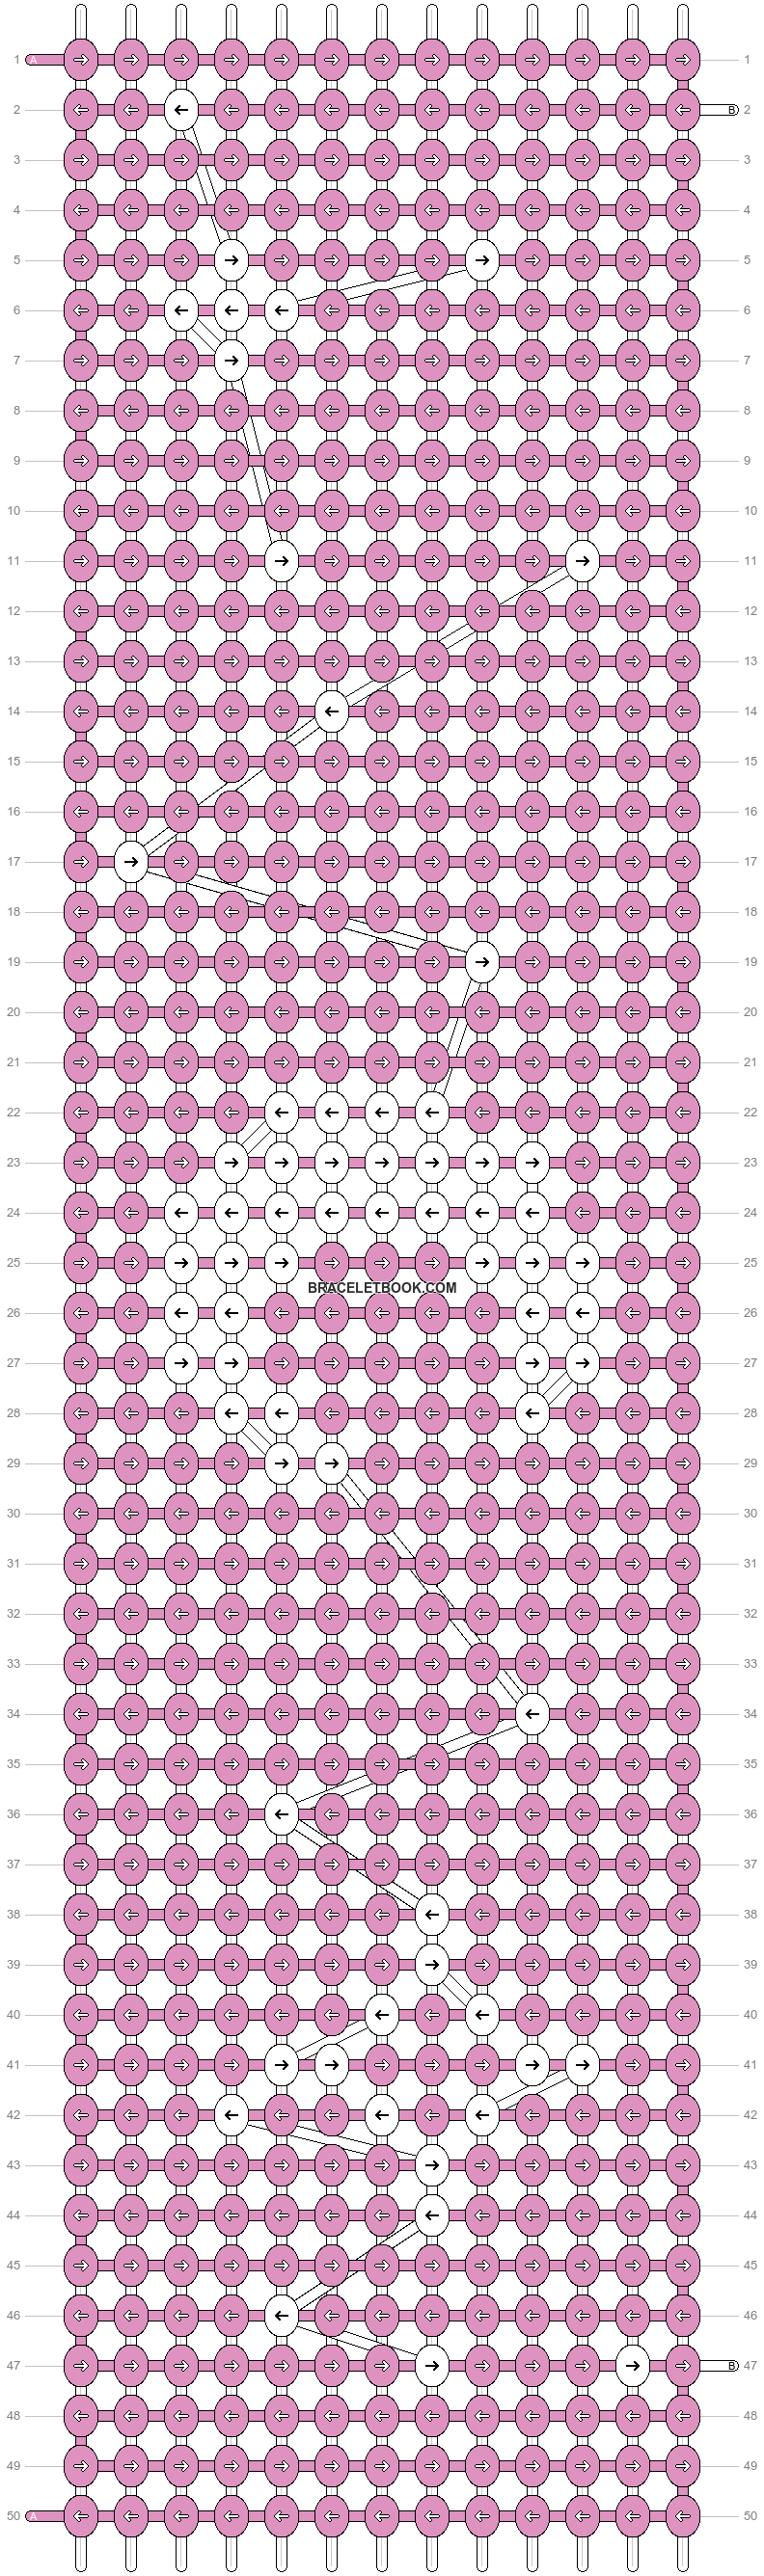 Alpha pattern #57316 variation #100121 pattern